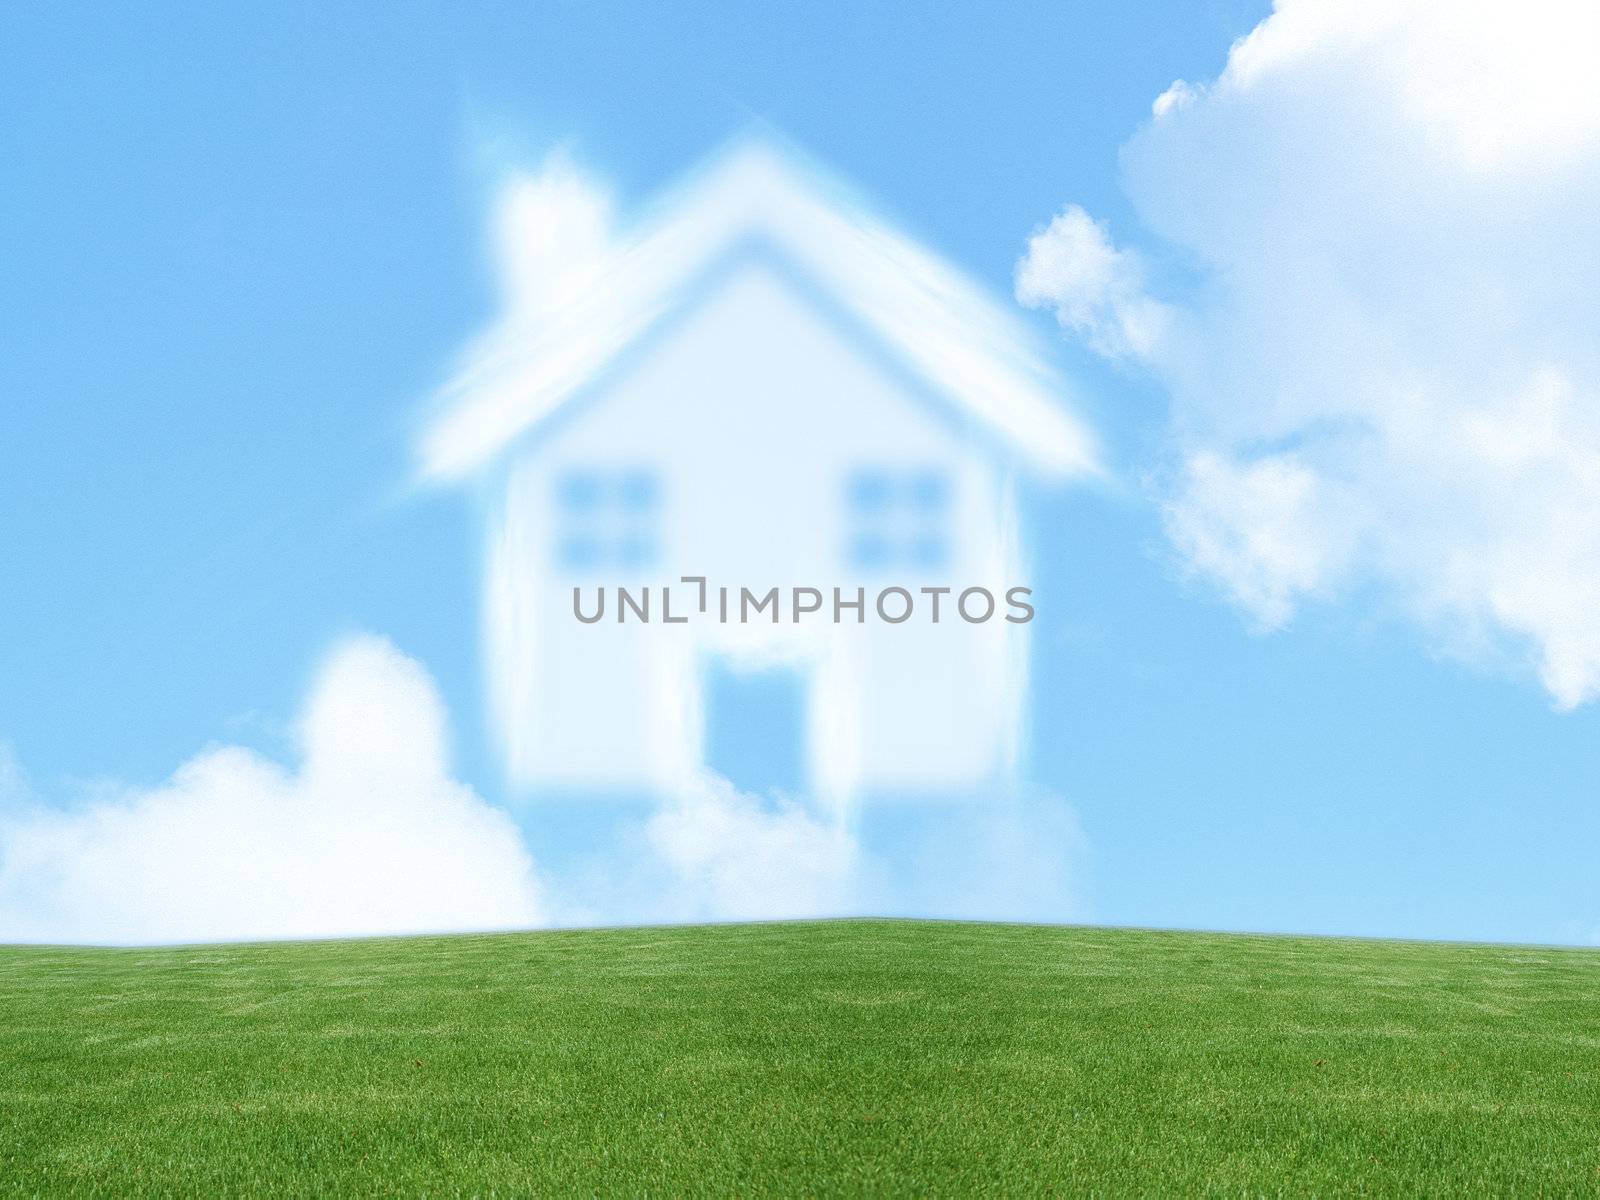 Dream of homeownership by designsstock